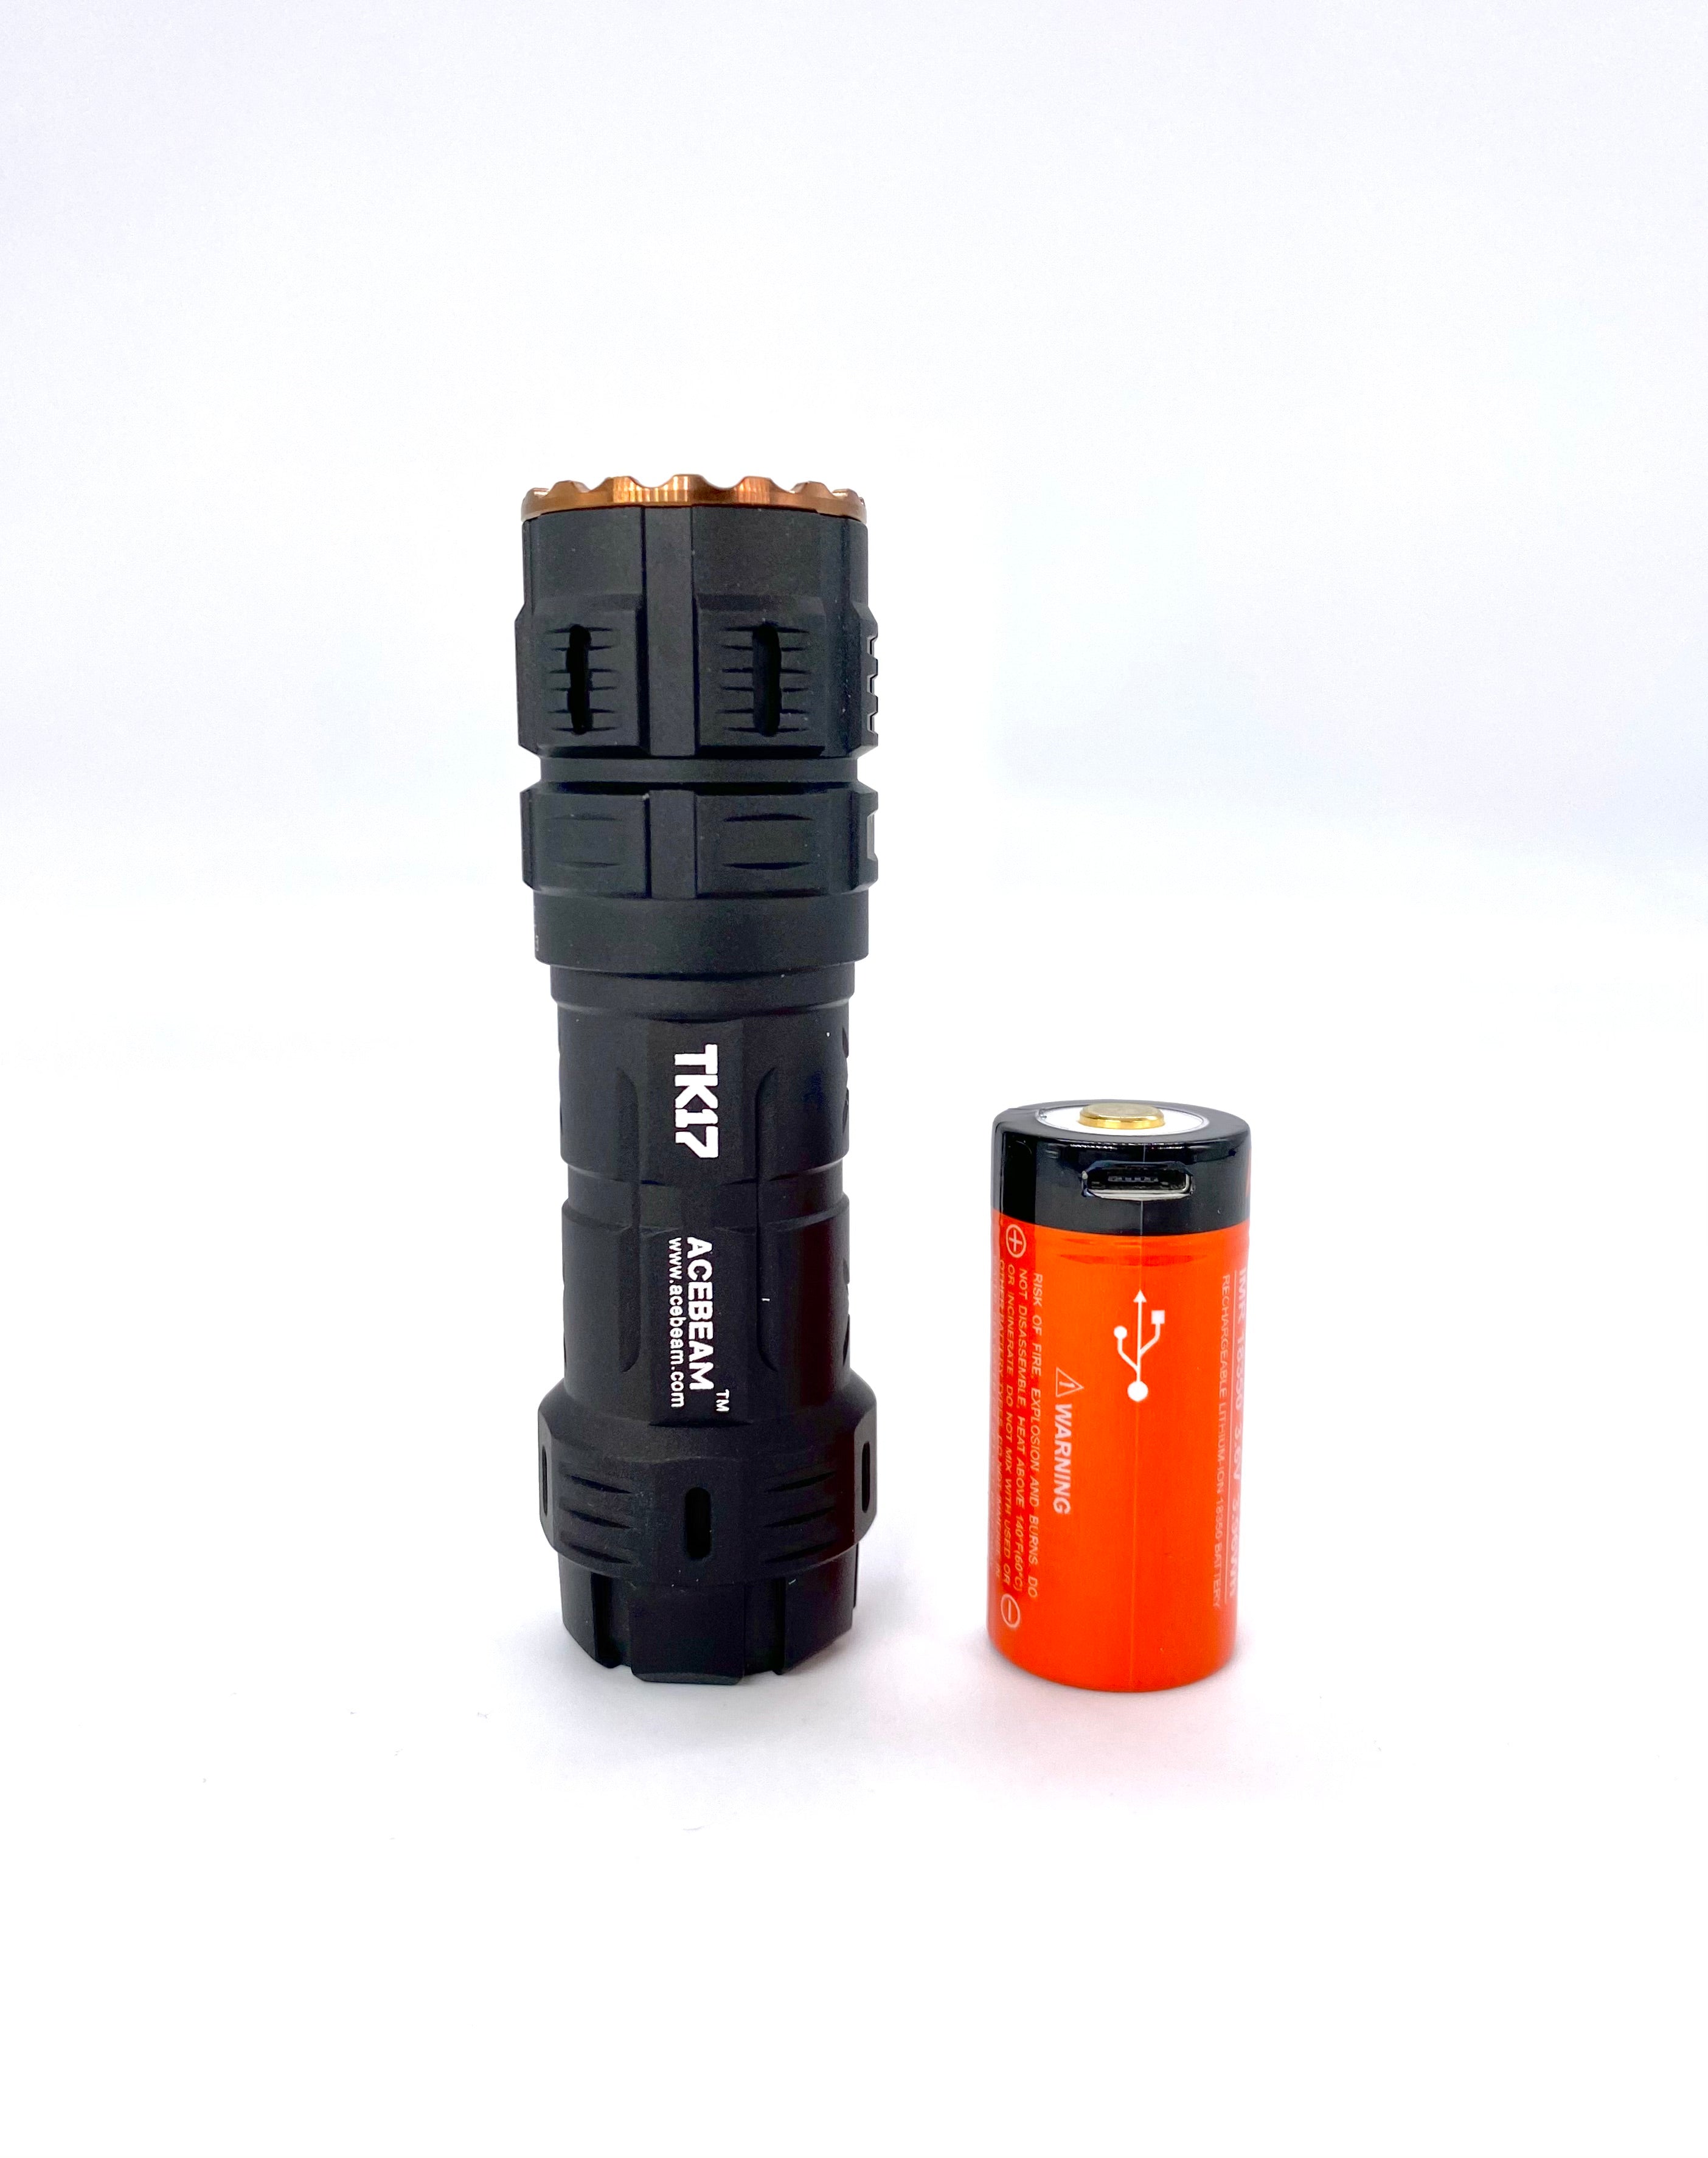 Acebeam TK17-AL Compact Flashlight / 1 x 18340 Micro USB Rechargeable